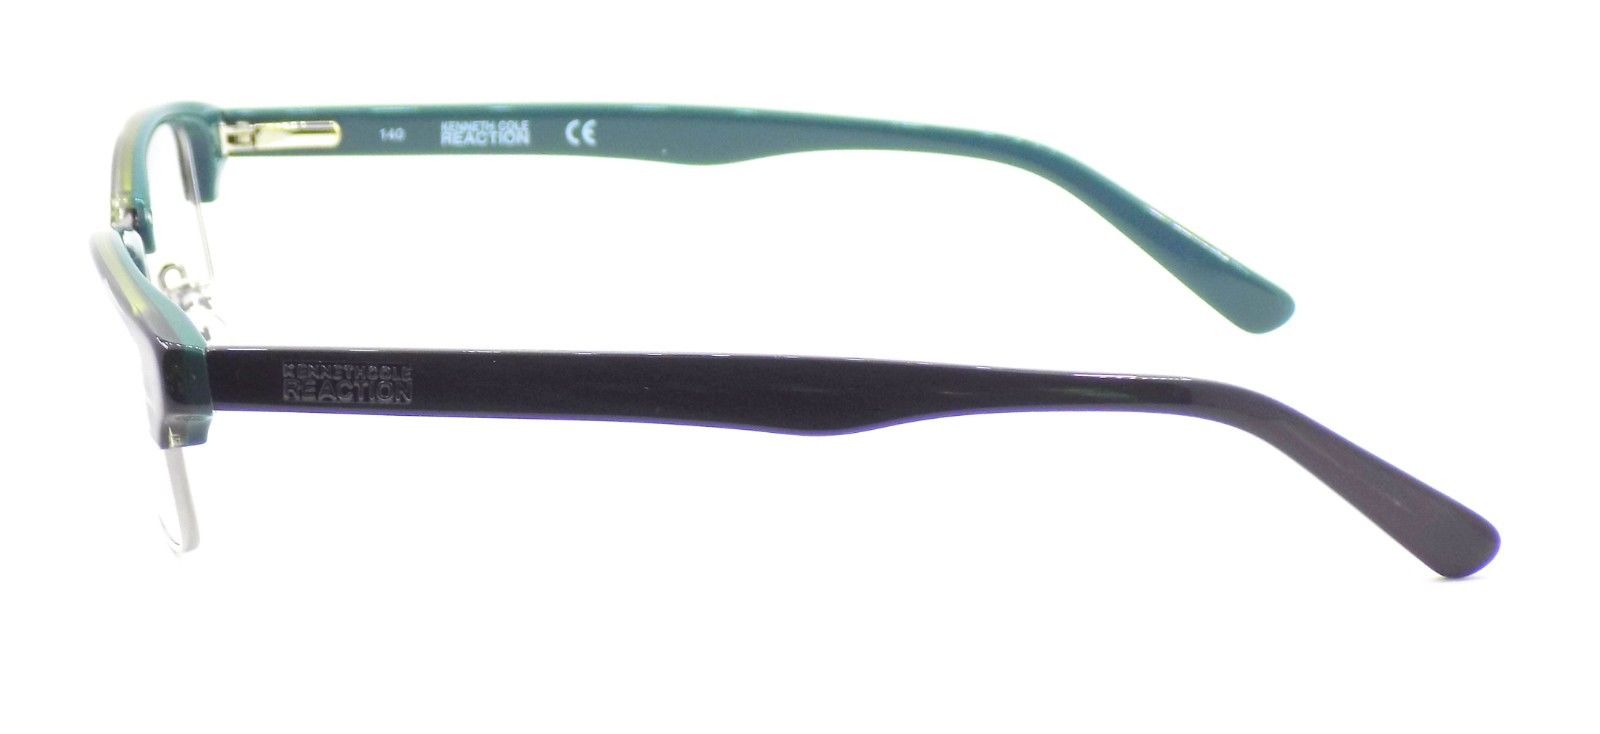 3-Kenneth Cole REACTION KC0741 098 Women's Eyeglasses Frames 50-18-140 Dark Green-664689593057-IKSpecs